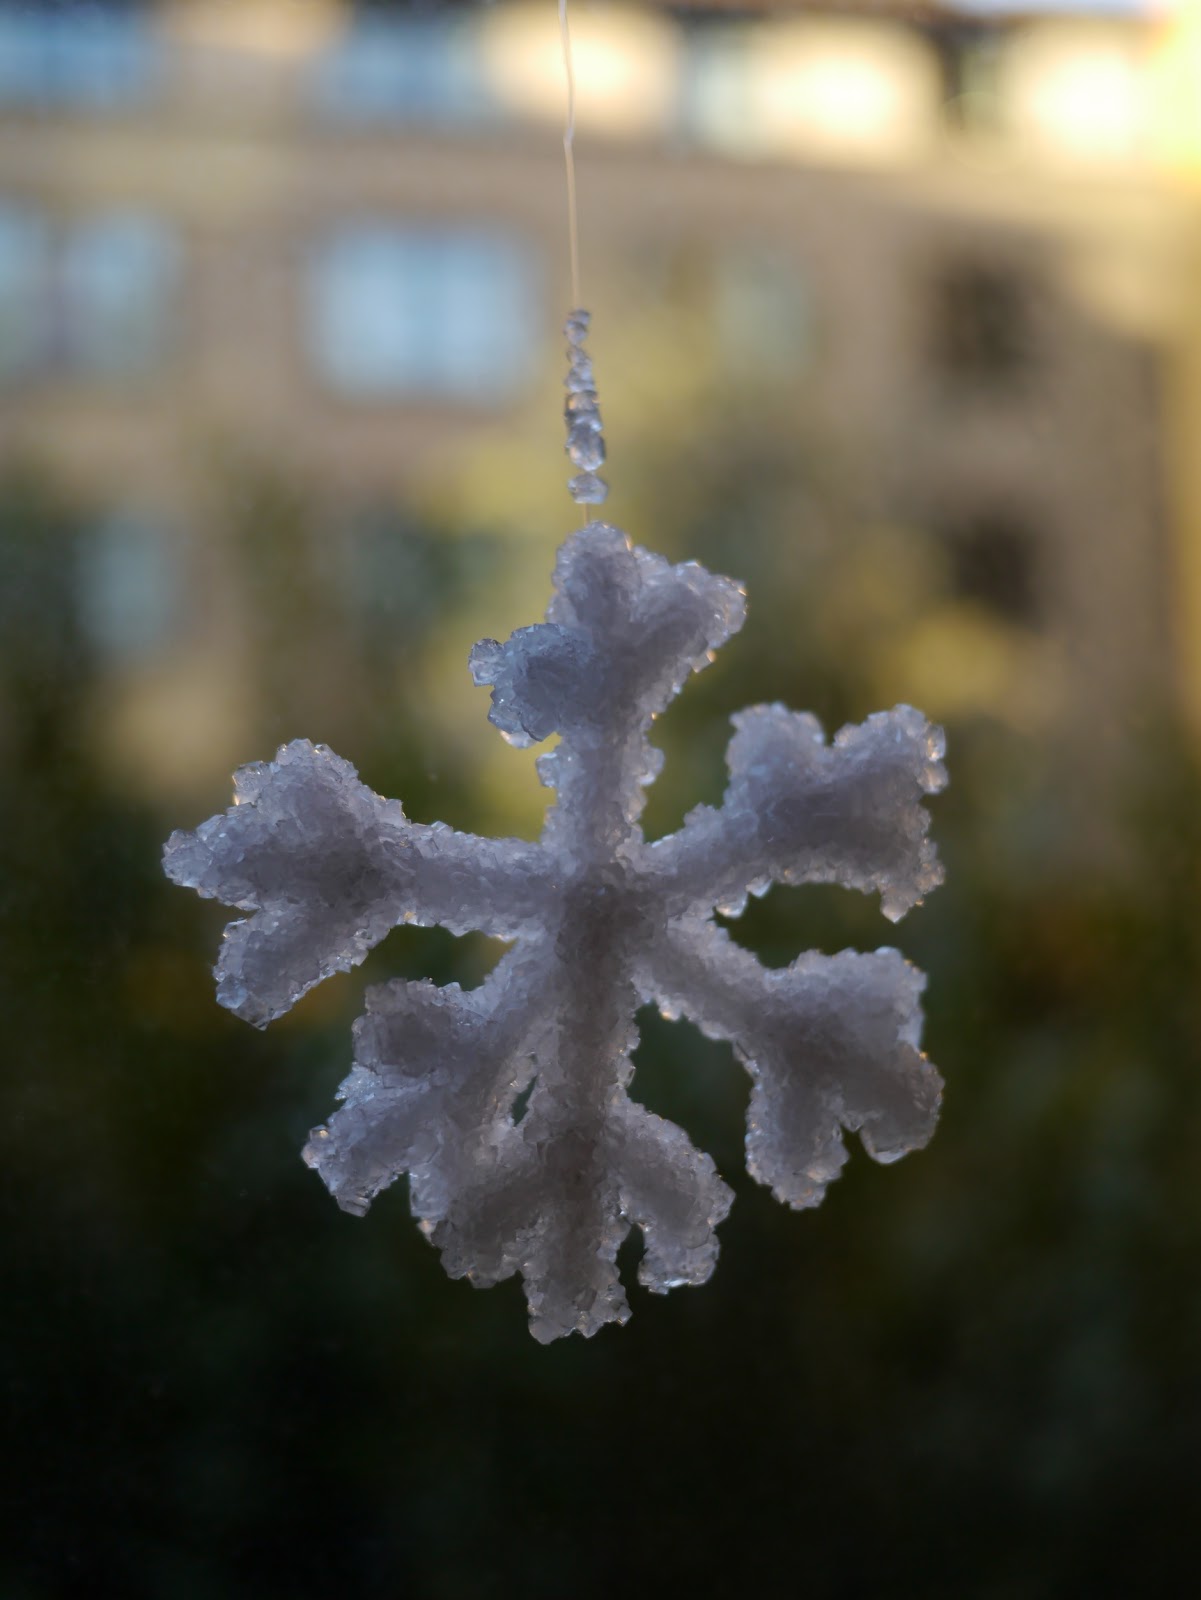 Borax Snowflake Crafts for Kids